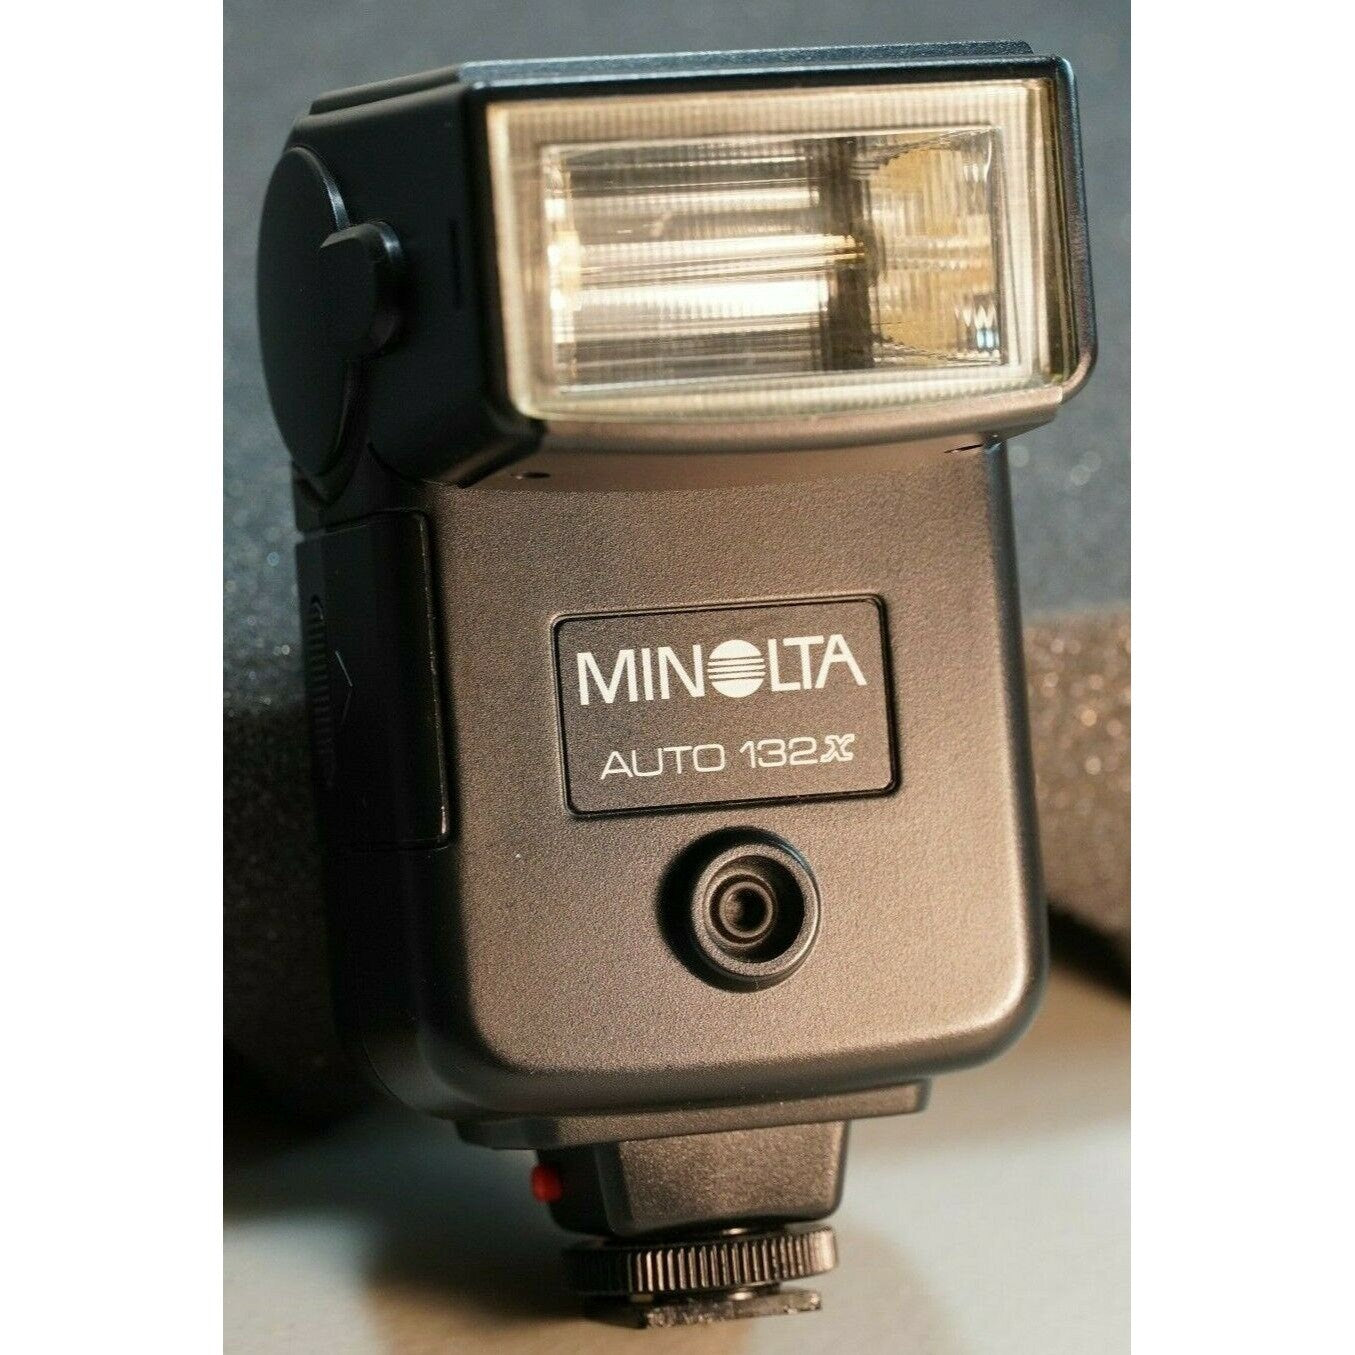 Konica Minolta Auto 132X Shoe Mount Flash for Minolta Camera